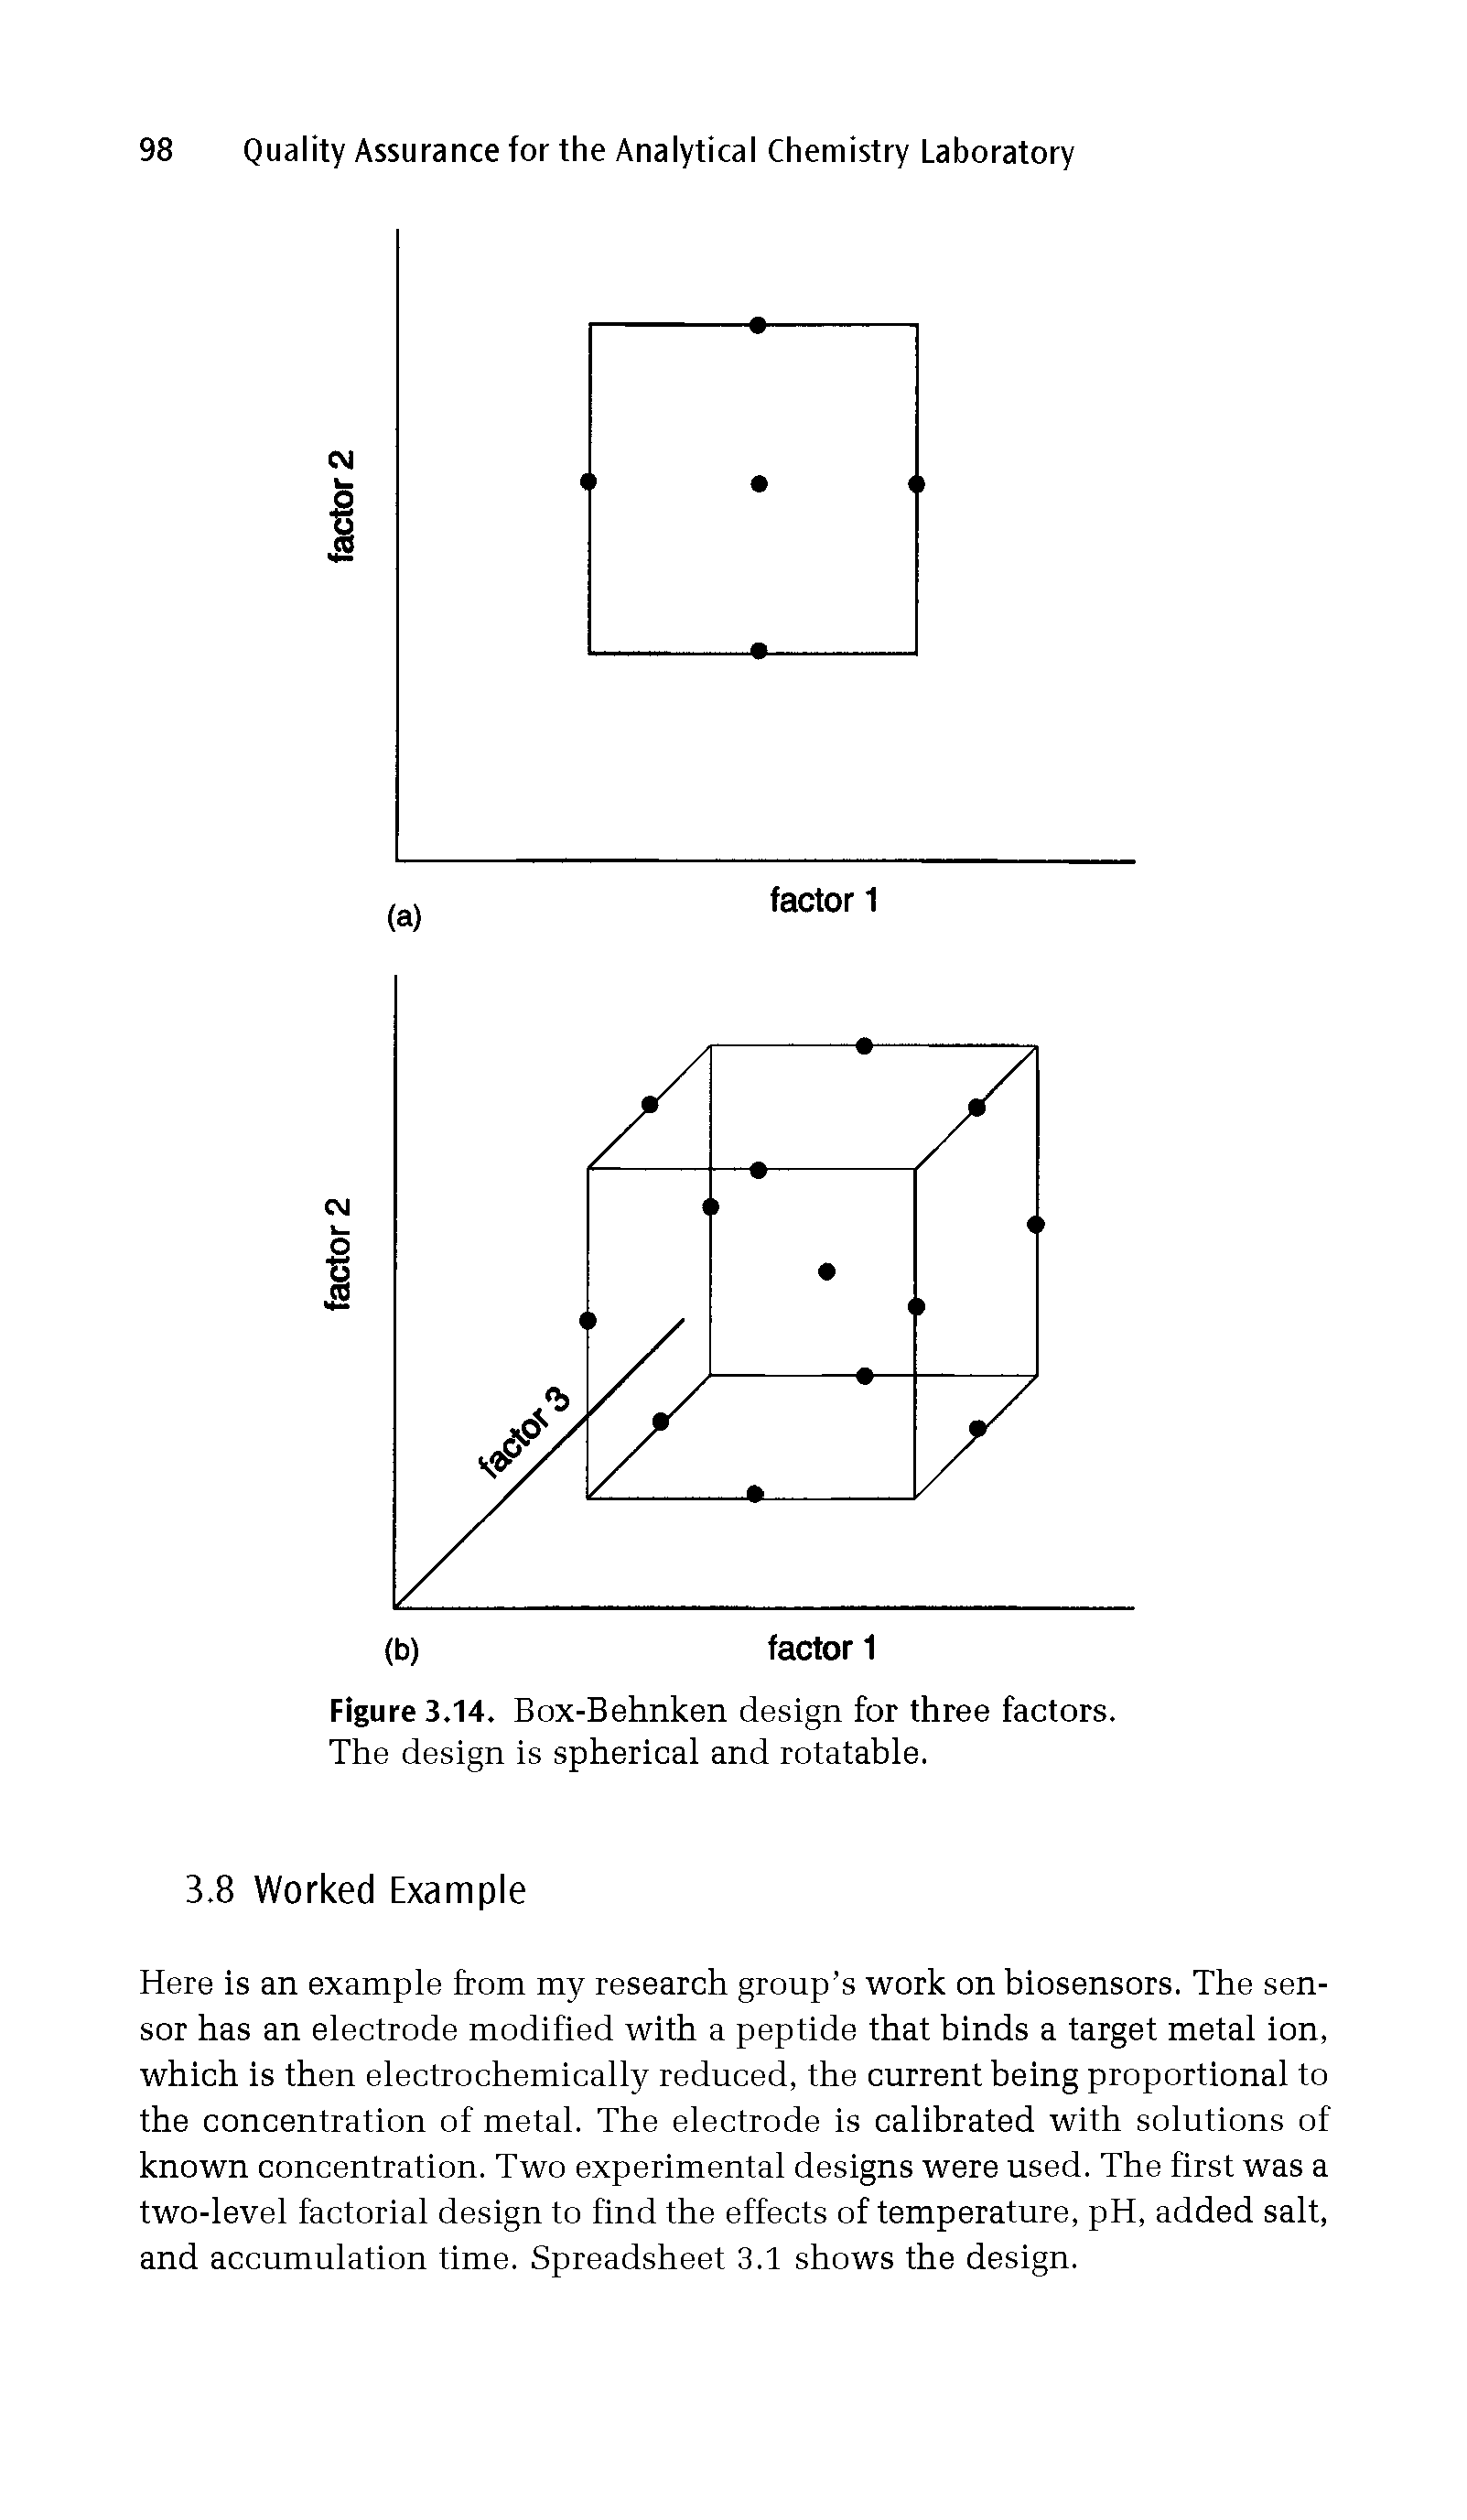 Figure 3.14. Box-Behnken design for three factors. The design is spherical and rotatable.